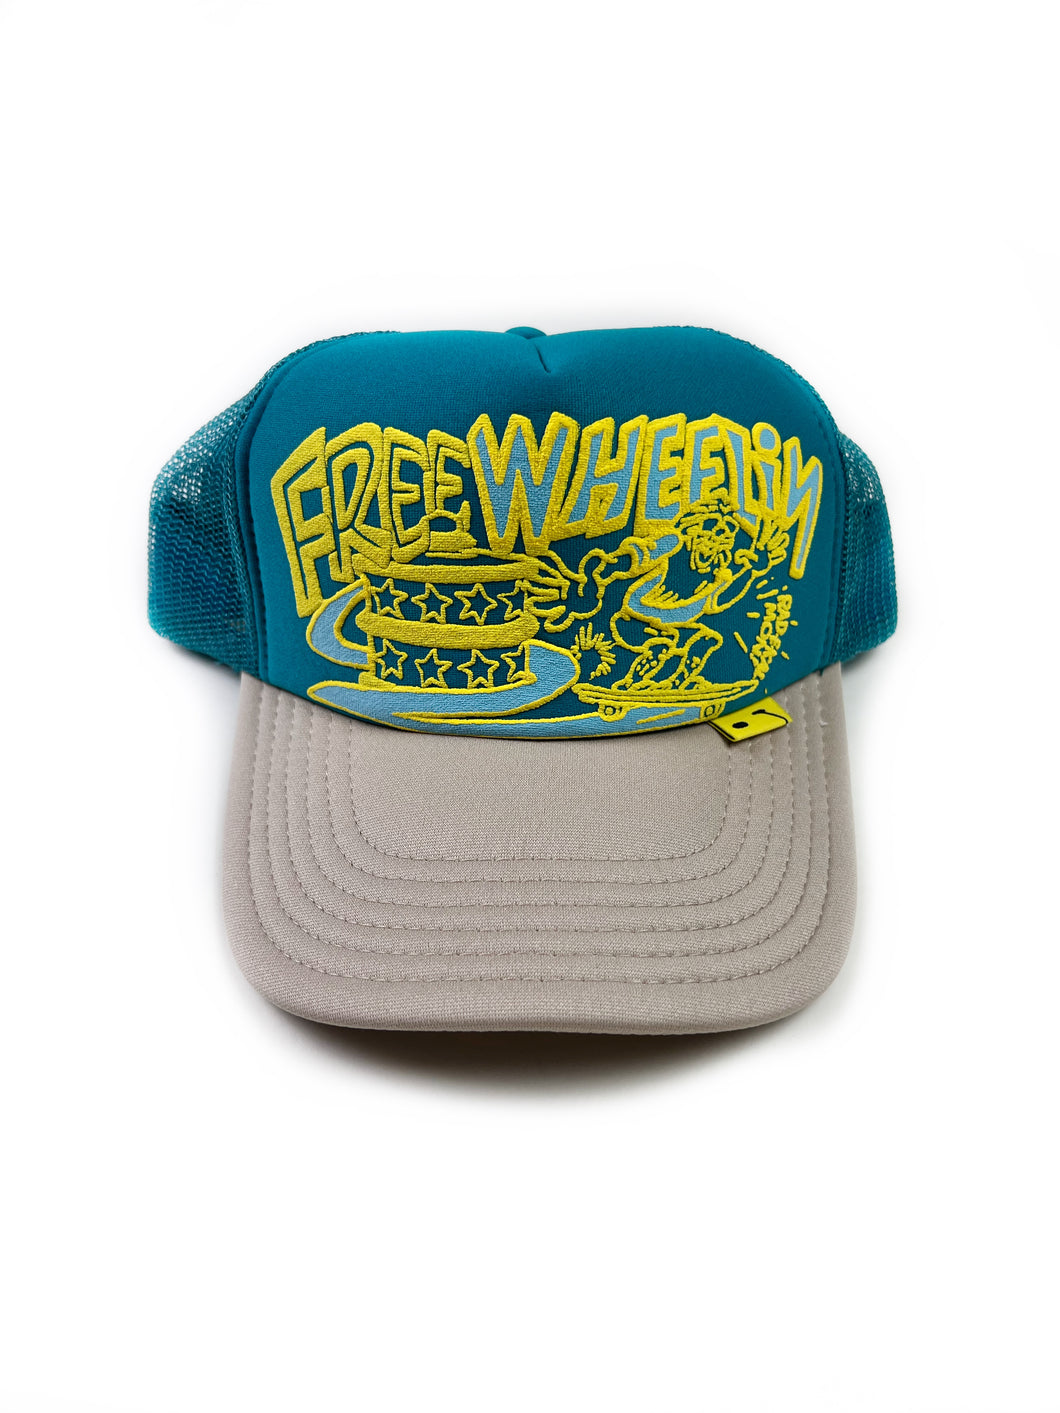 Kapital “Free Wheelin” Trucker Hat Teal